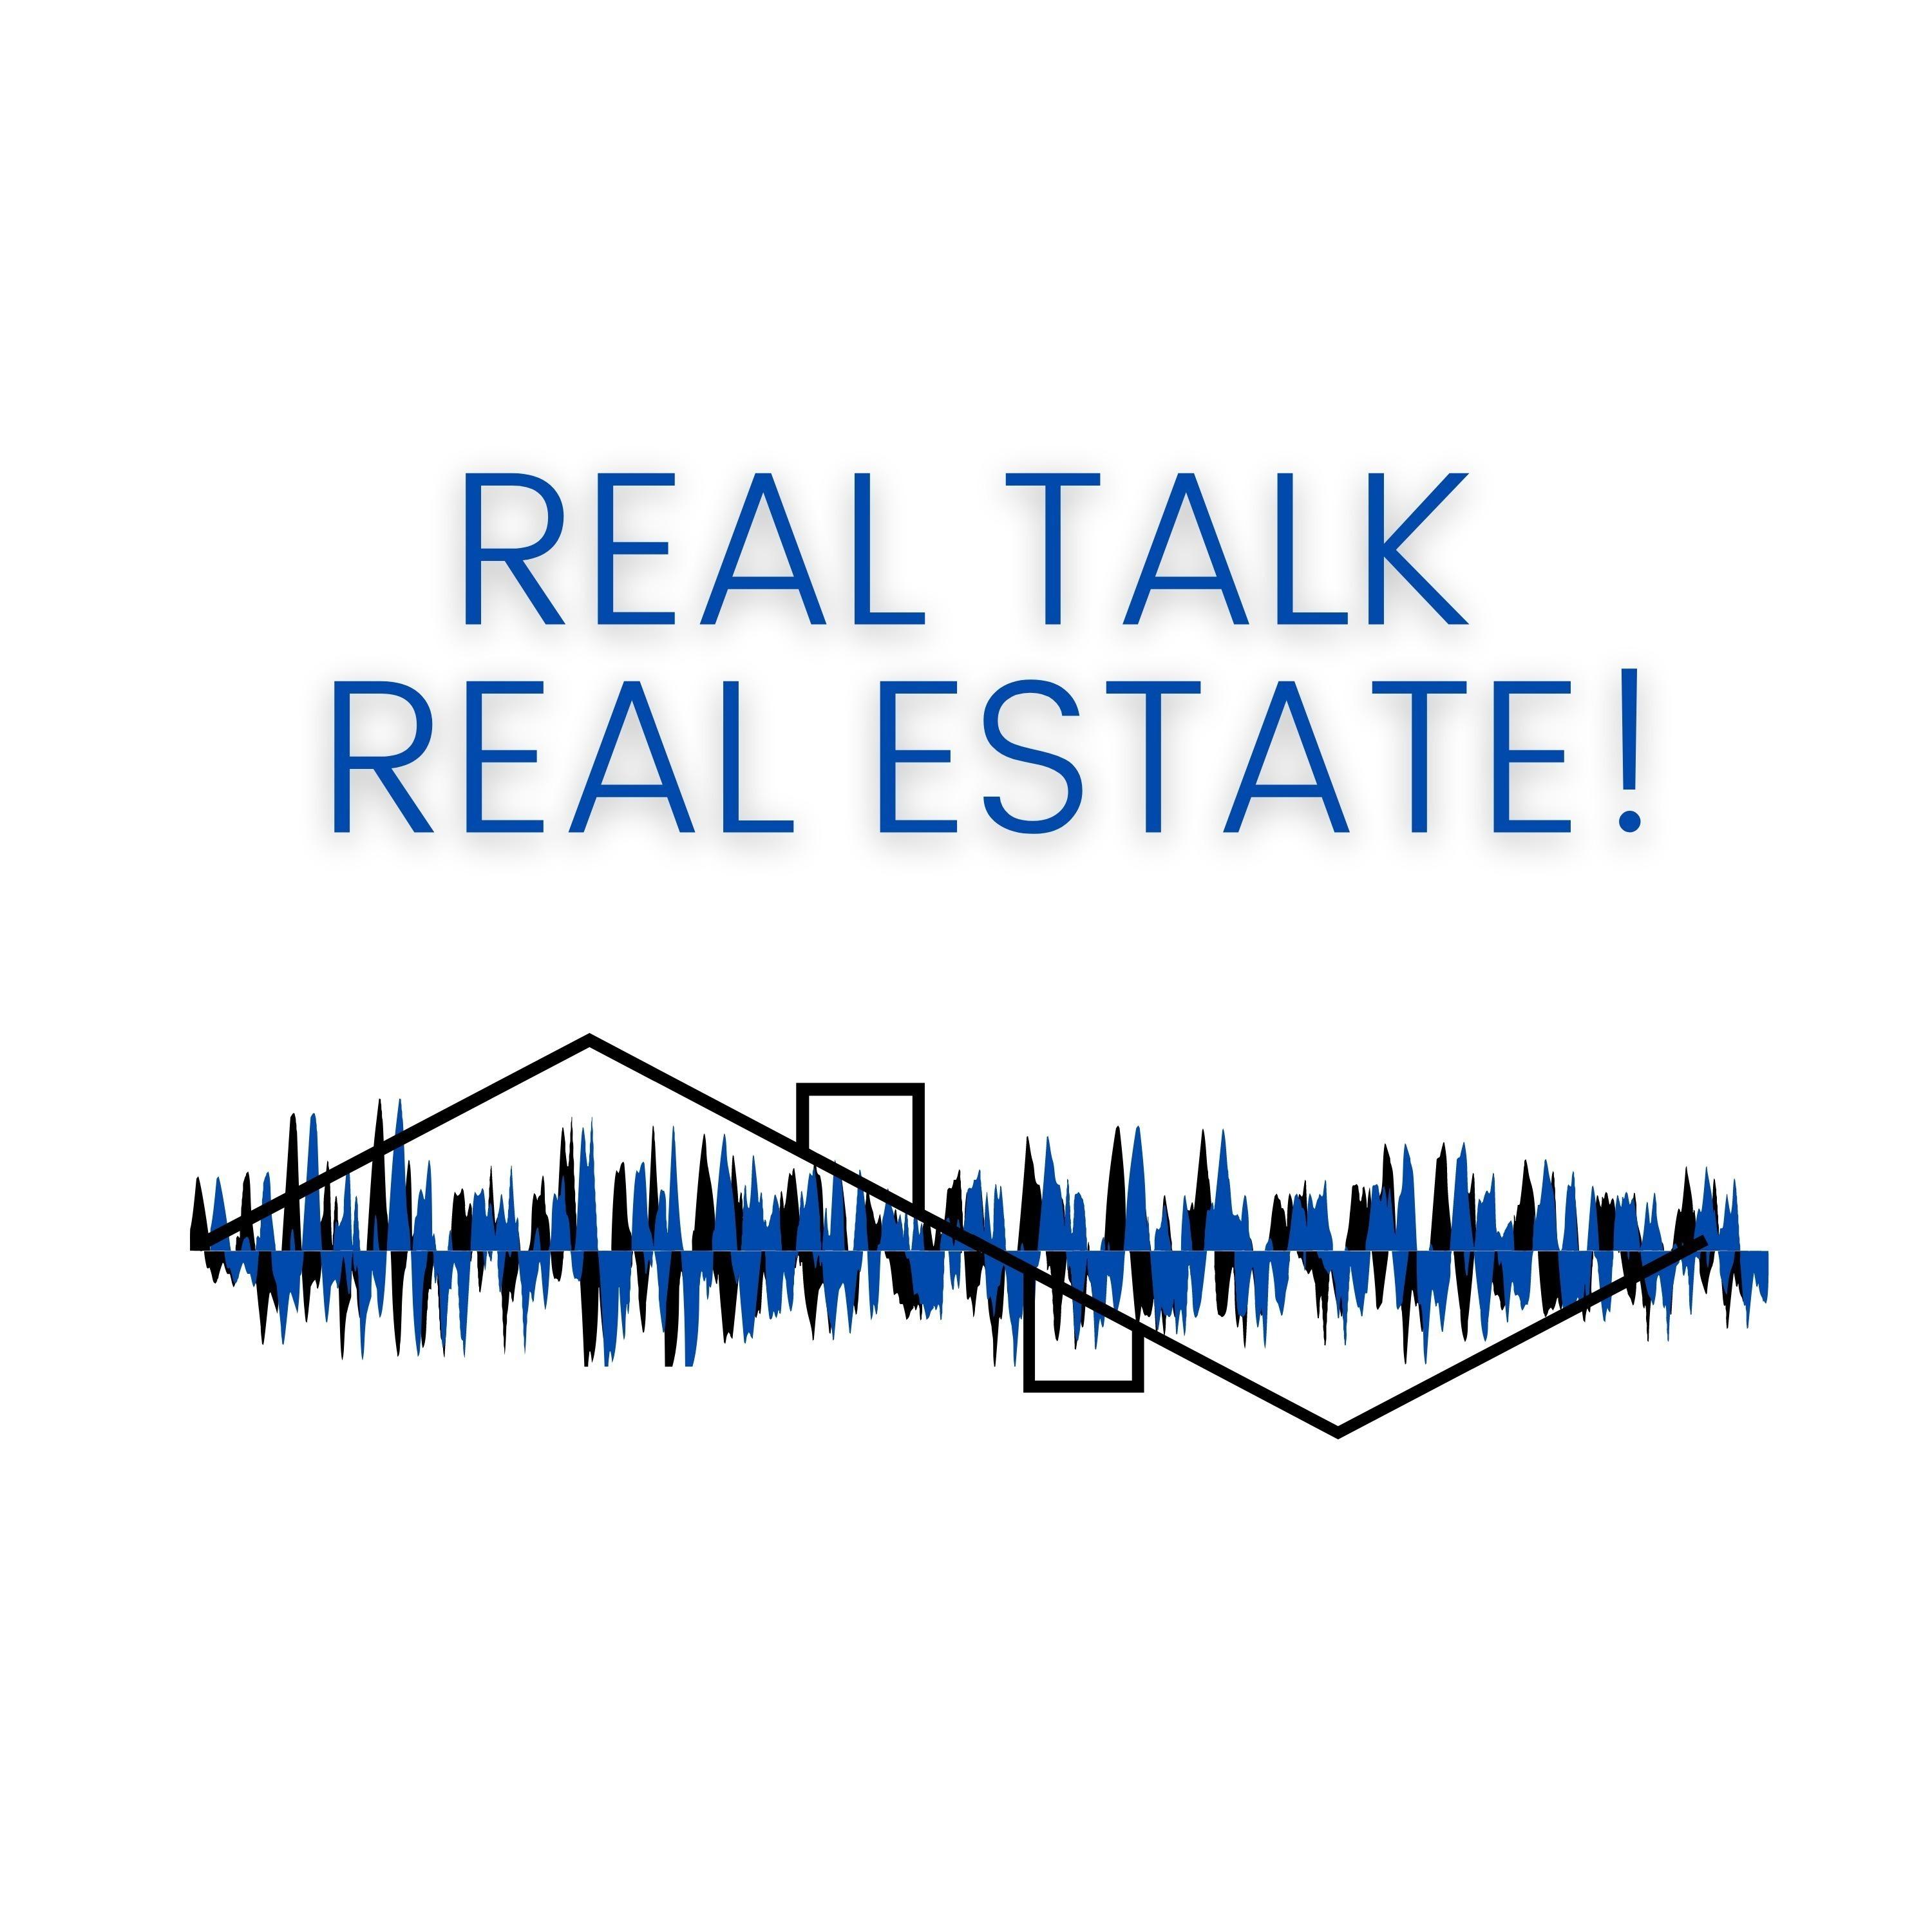 Real Talk Real Estate!